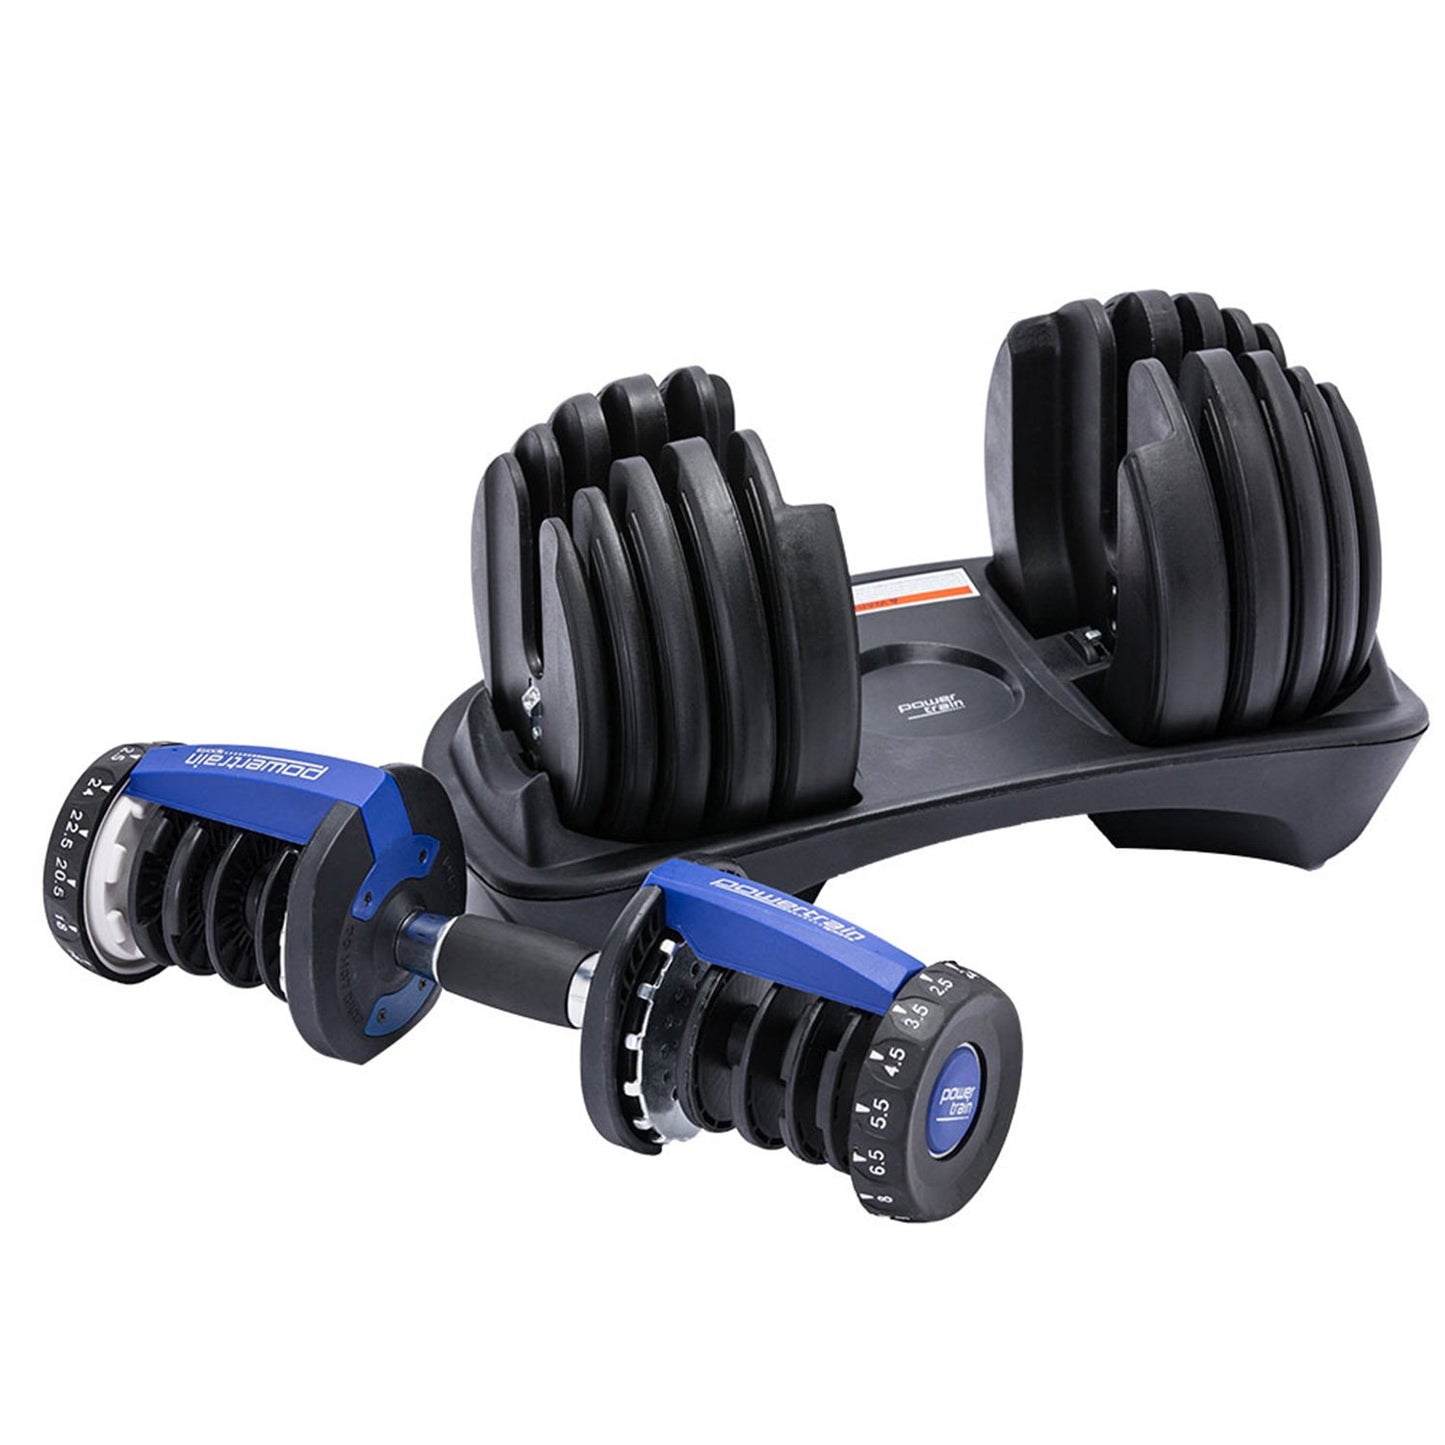 Powertrain 2x 24kg Adjustable Dumbbell Home Gym Set